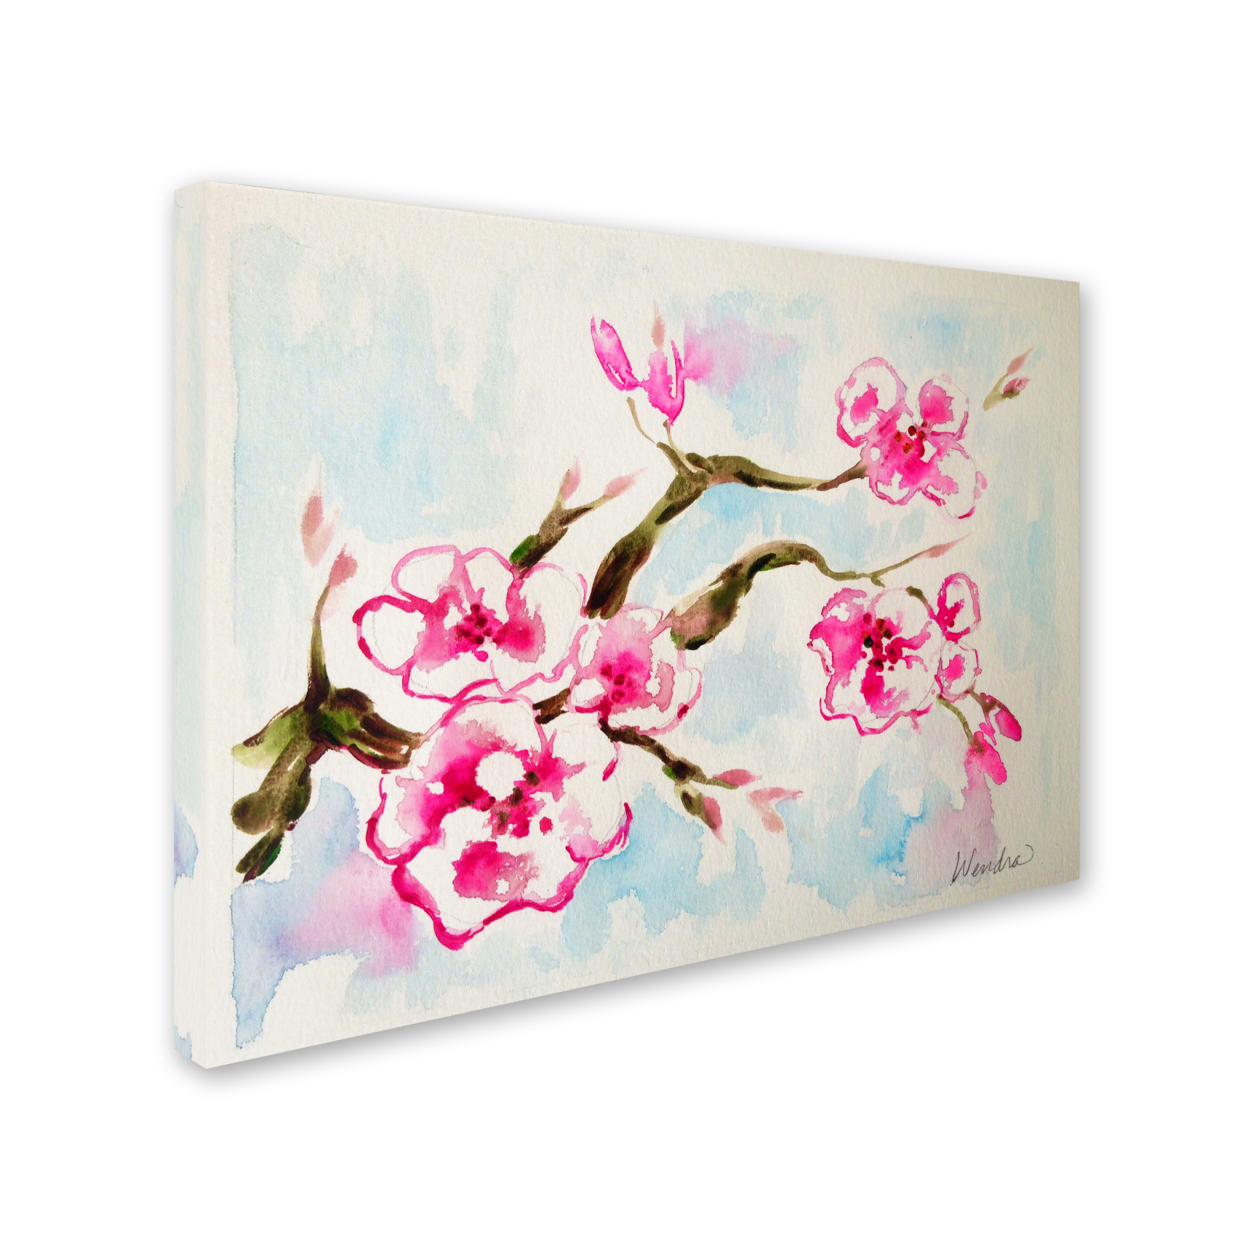 Wendra 'Cherry Blossom' 14 X 19 Canvas Art